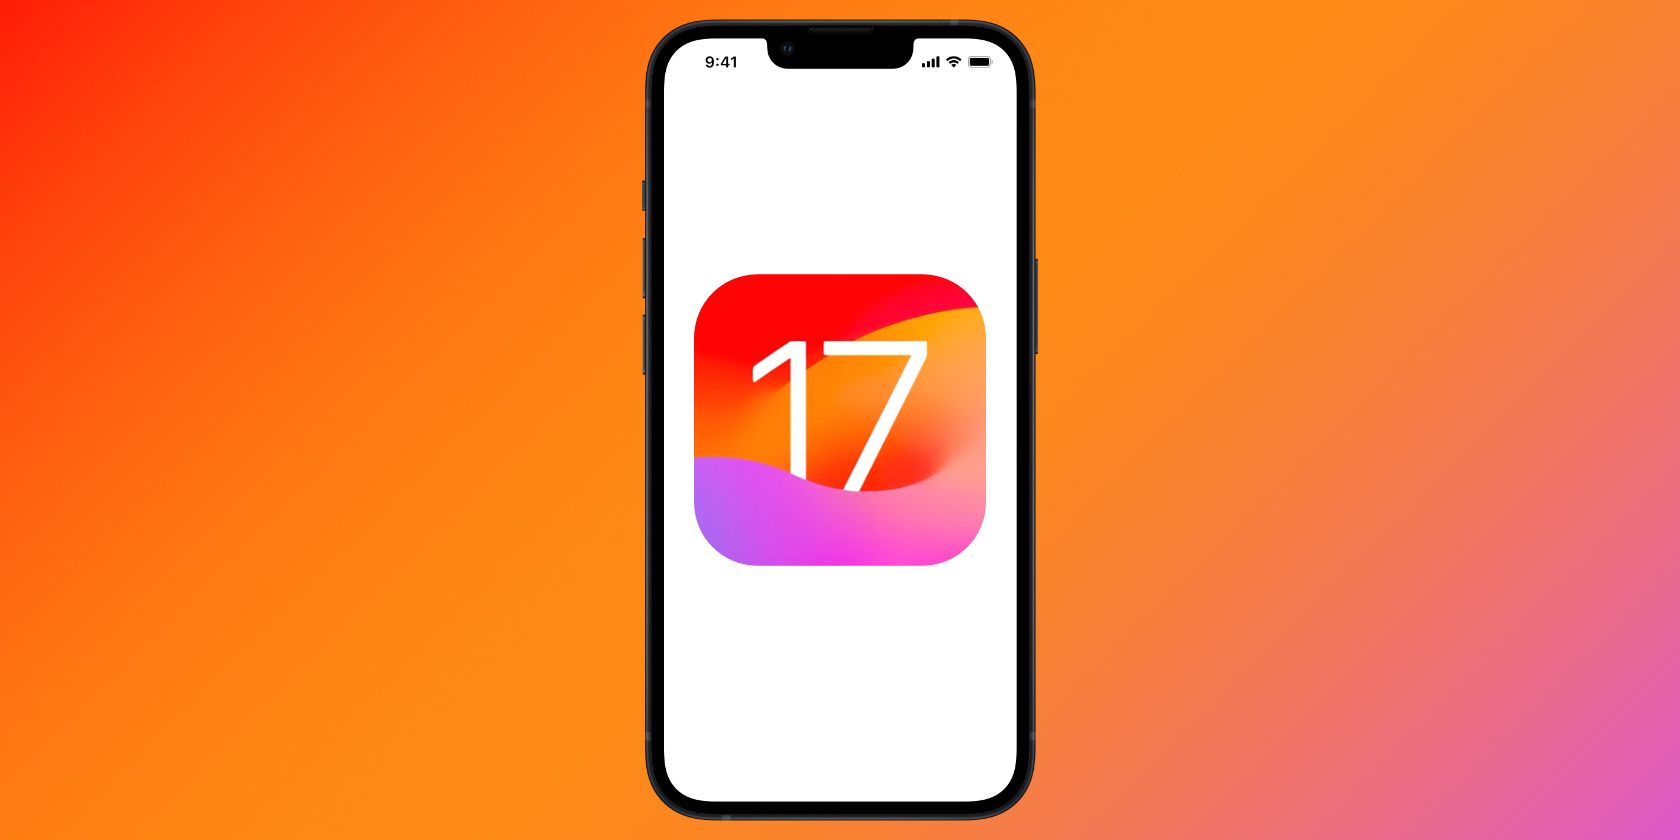 iOS 17 icon on iPhone screen